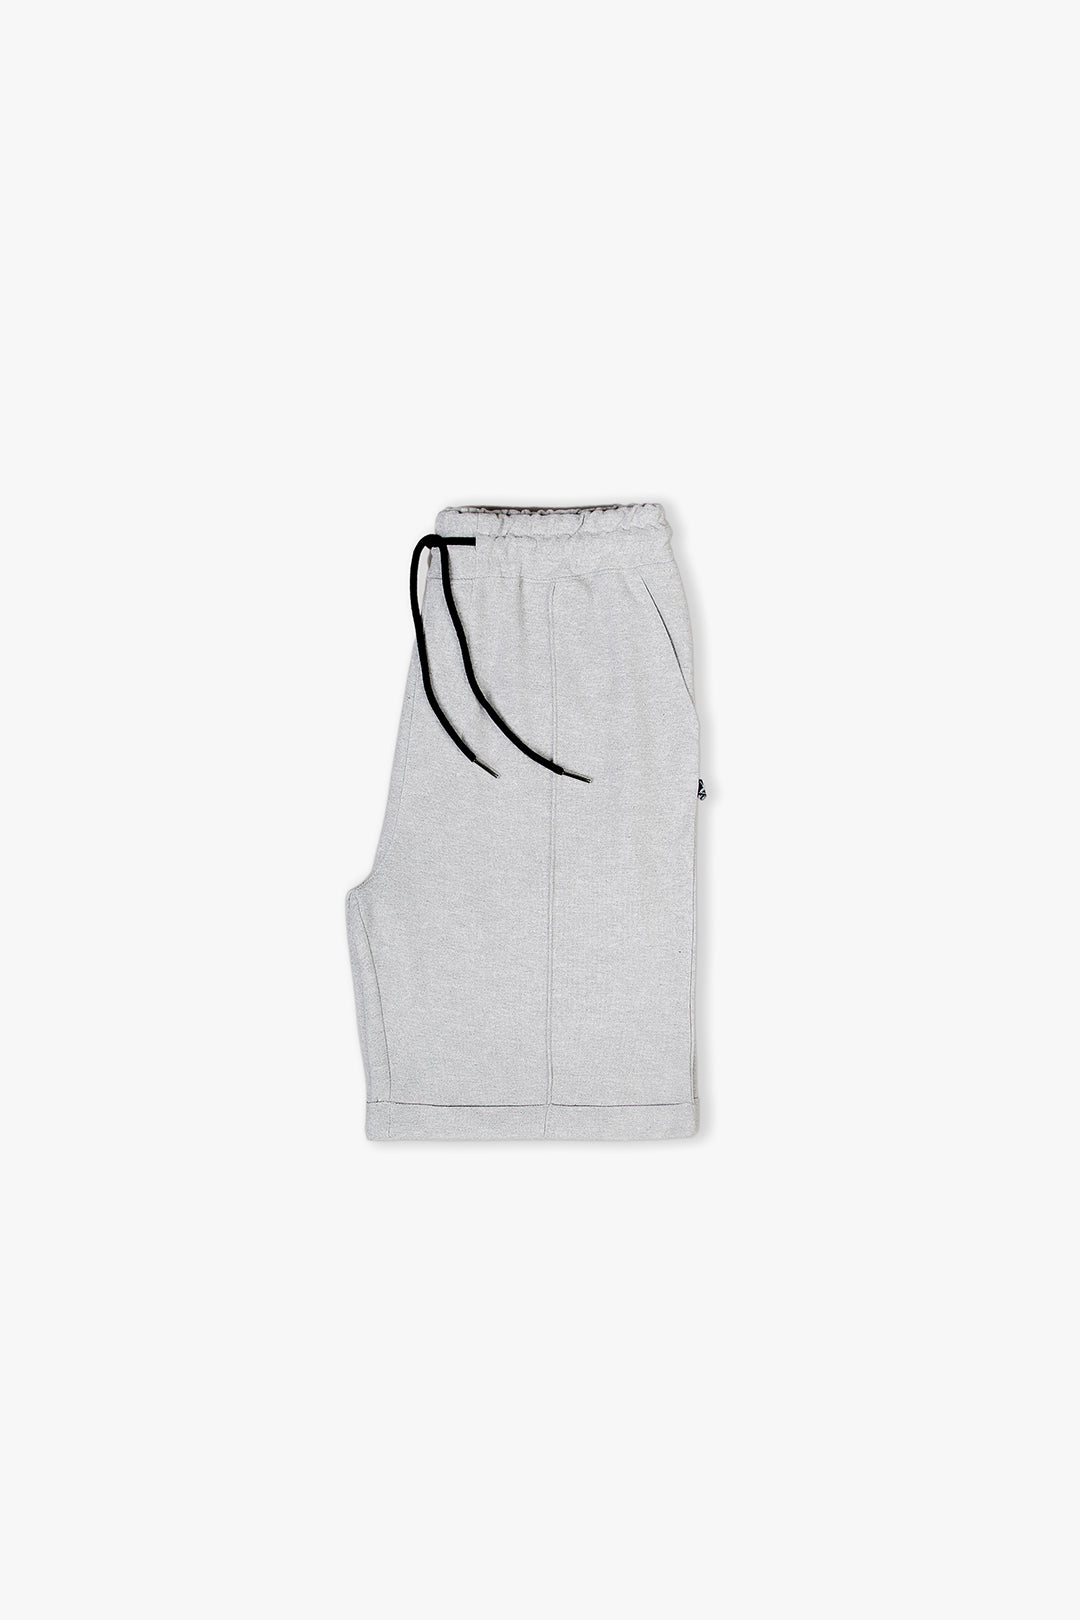 Men's Grey Shorts